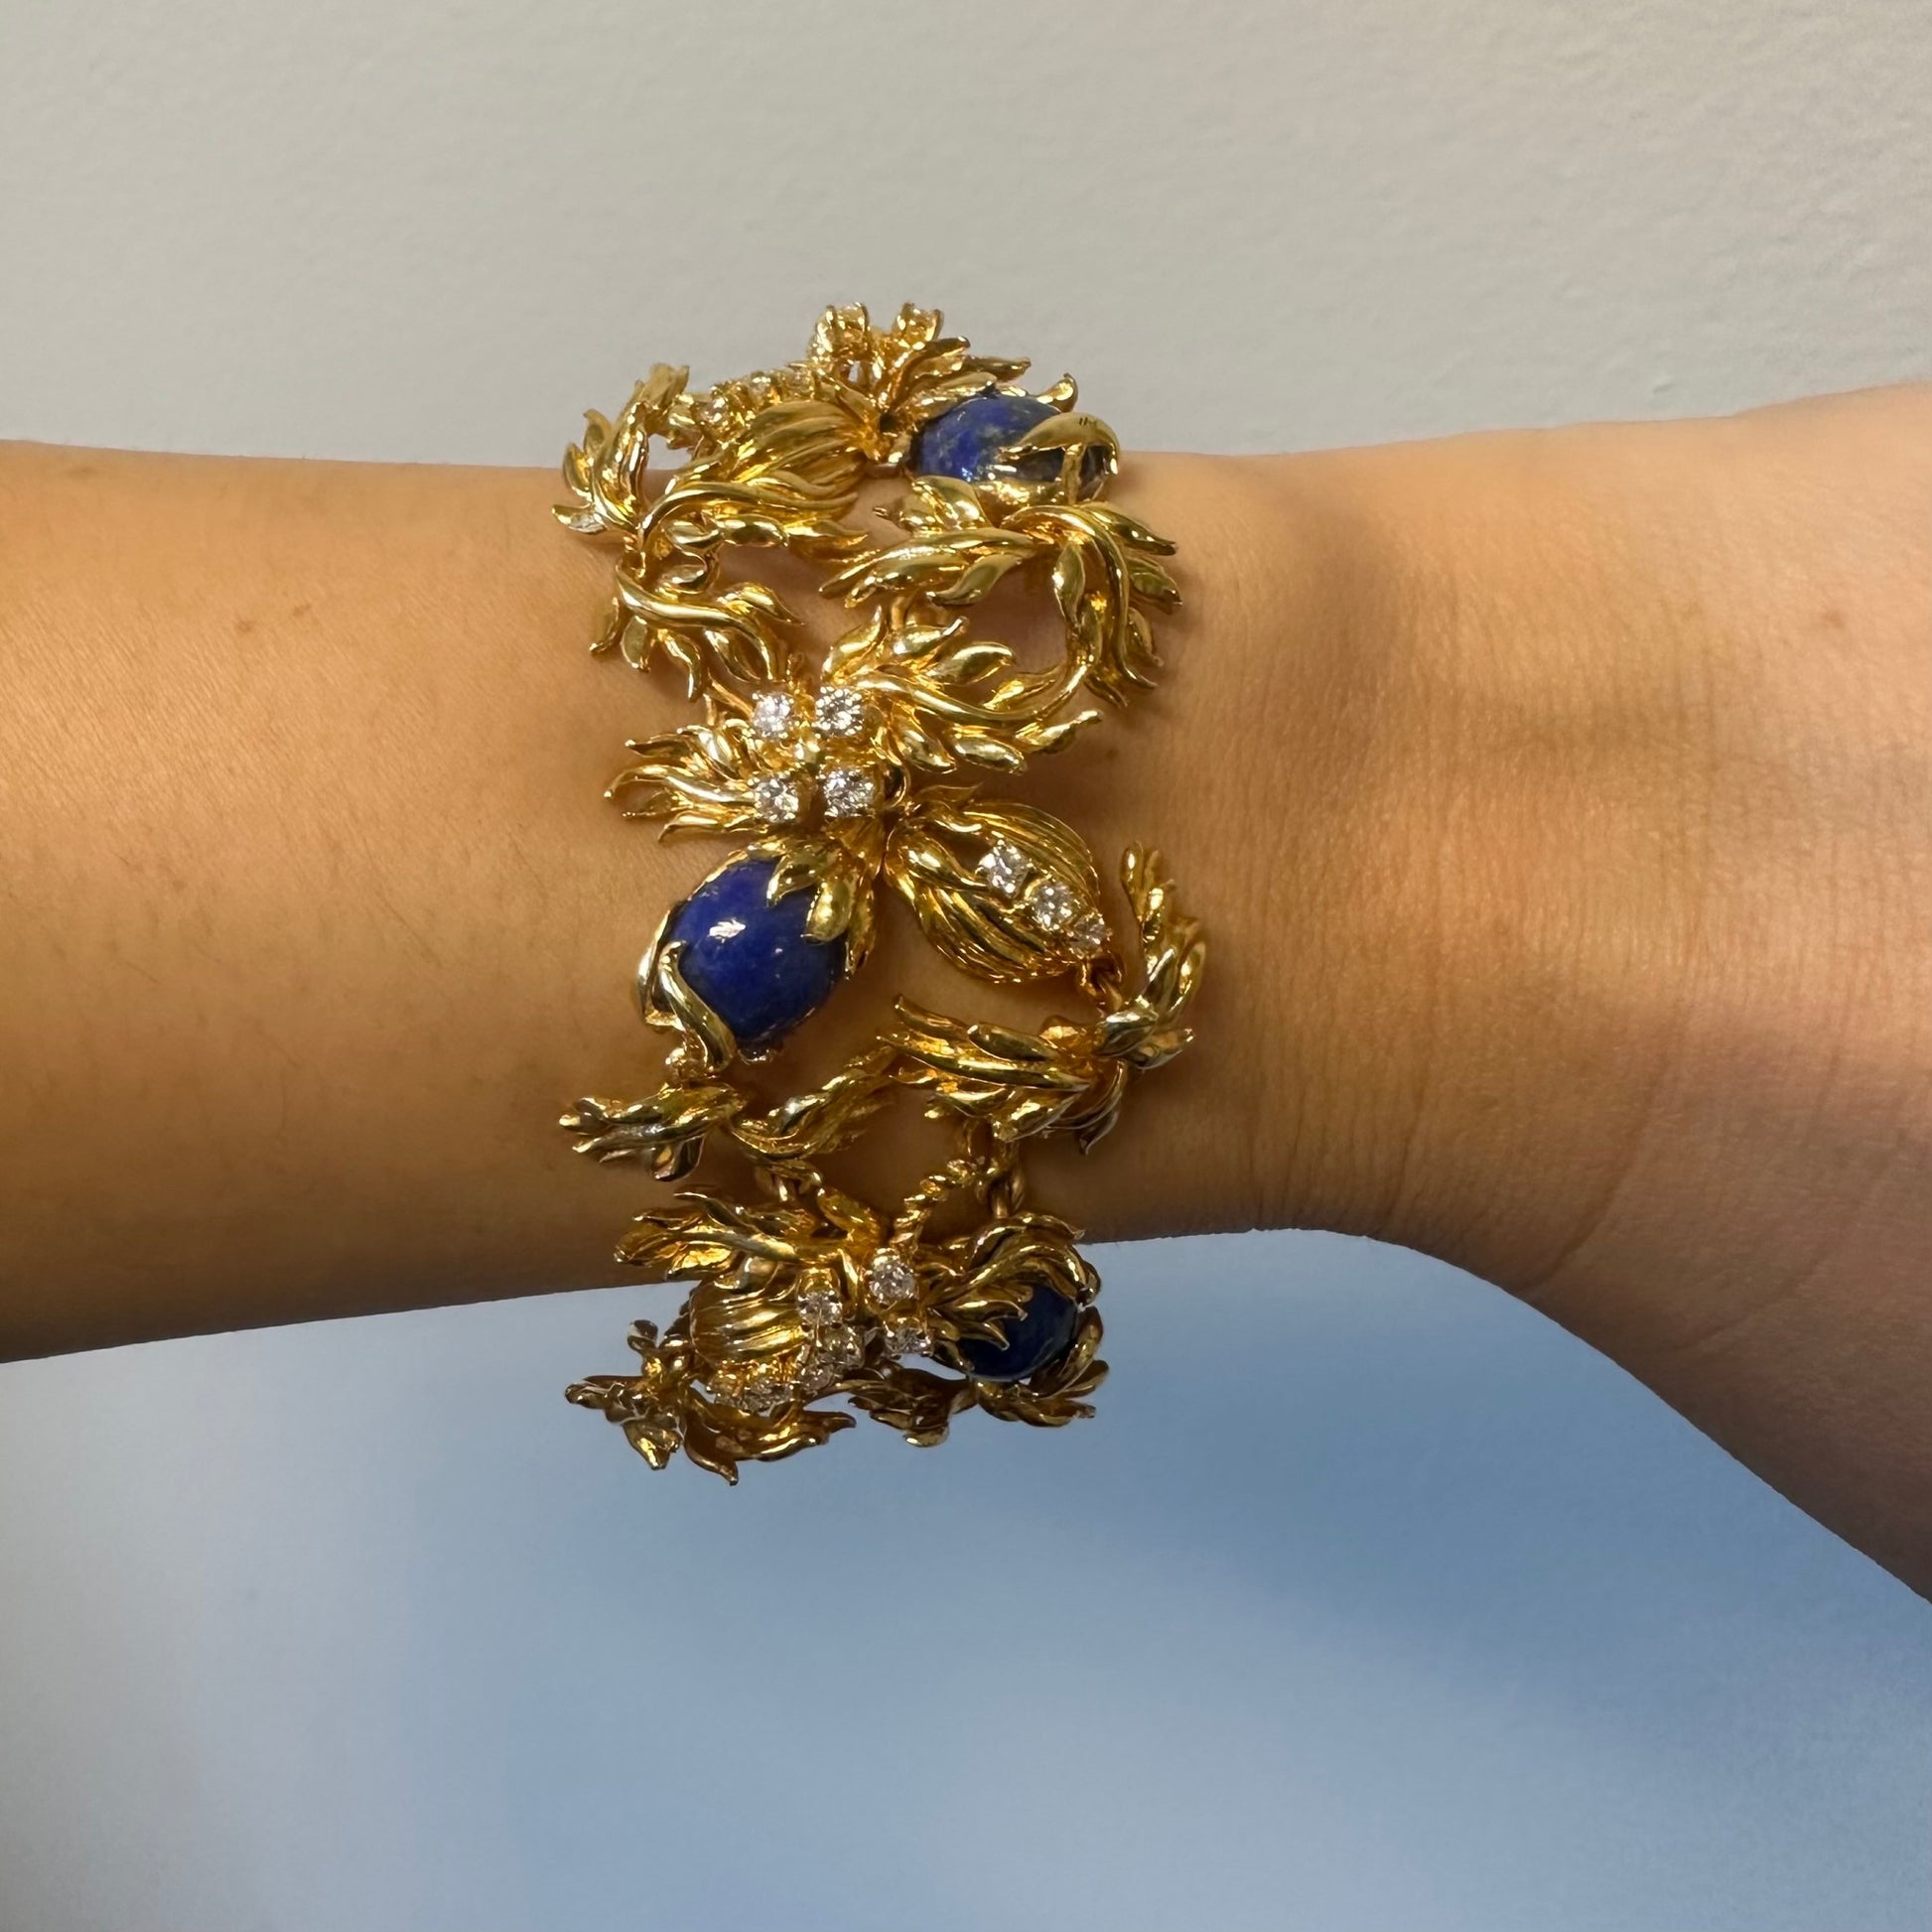 Cartier Aldo Cipullo 1970s 18KT Yellow Gold Lapis Lazuli & Diamond Bracelet on wrist